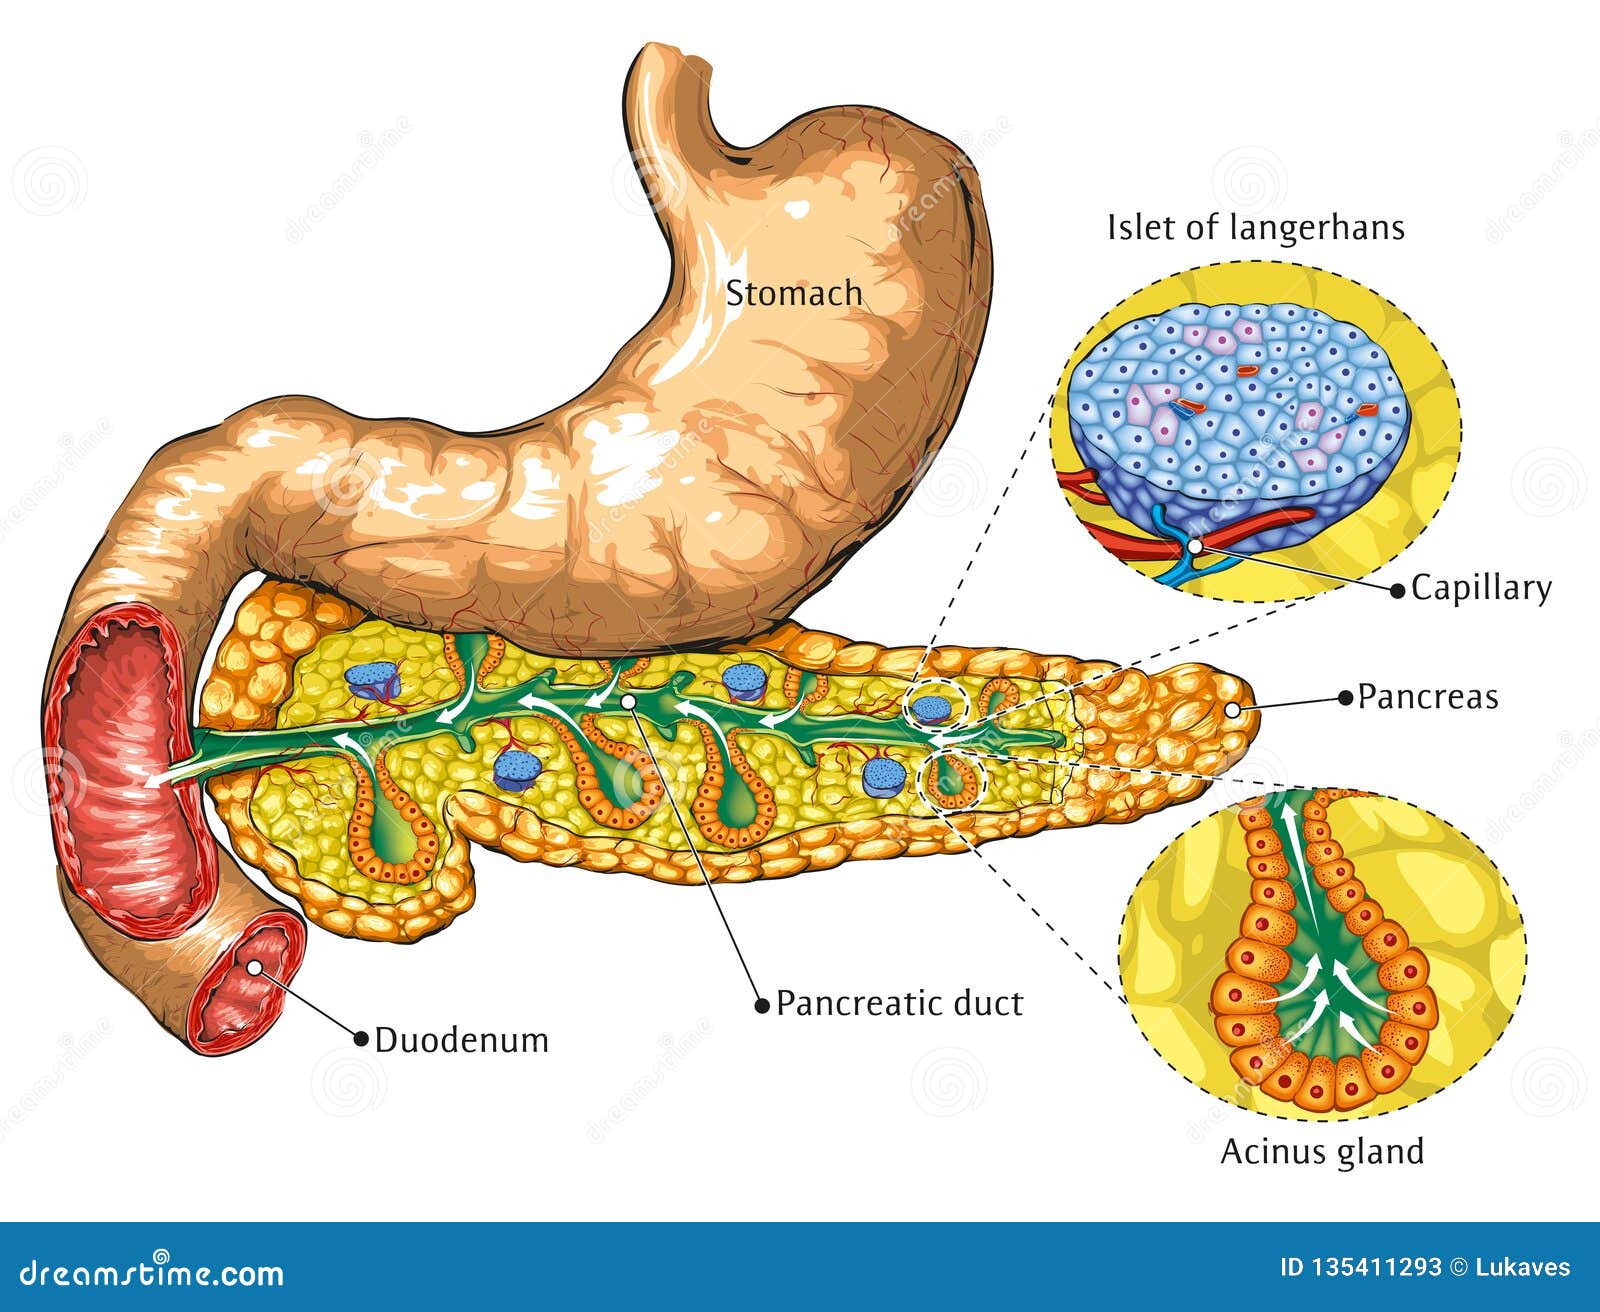 Желудком почками печенью поджелудочной. Поджелудочная железа анатомия ЖКТ. Строение поджелудочной железы. Анатомия желудка человека и панкреас. Поджелудочная железа панкреатический сок.